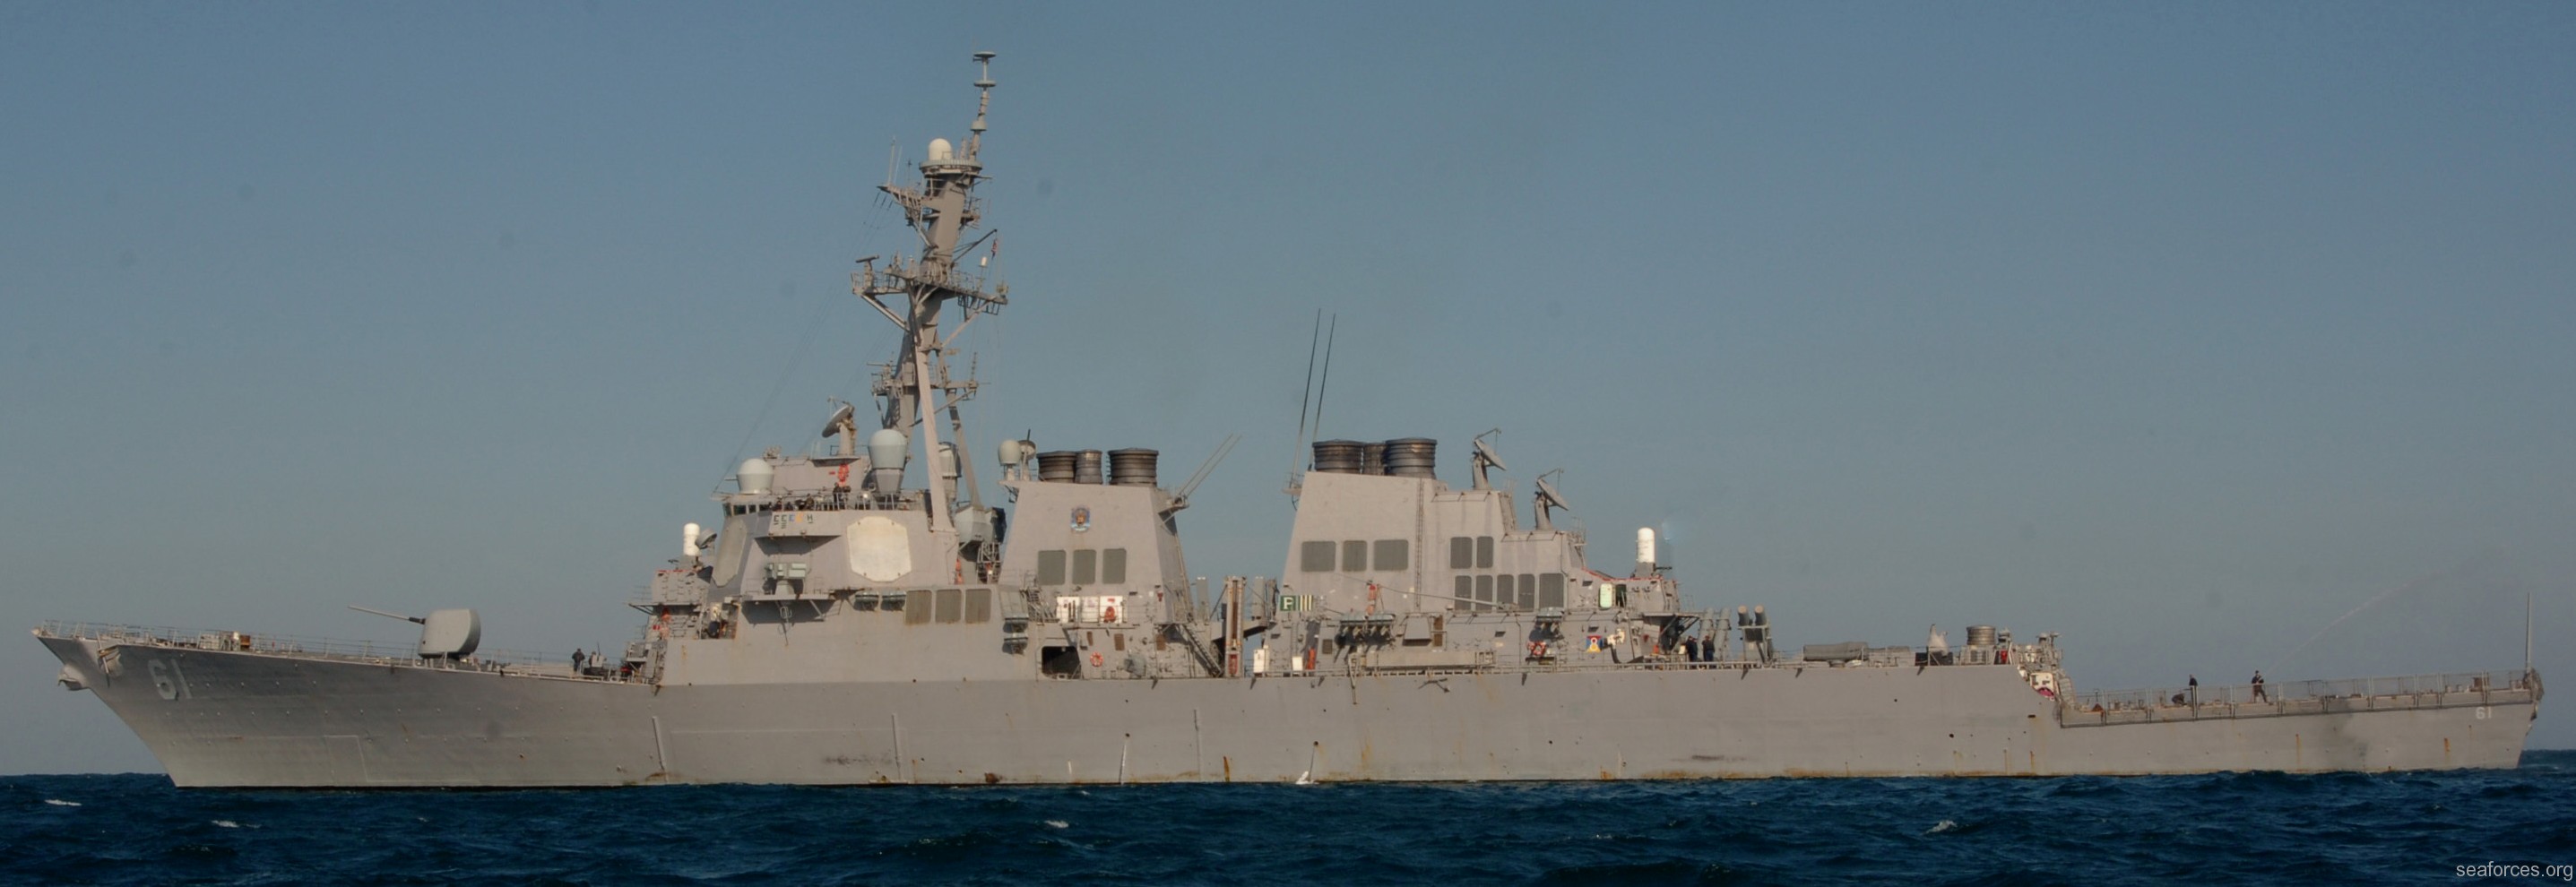 ddg-61 uss ramage guided missile destroyer us navy 88 arabian gulf